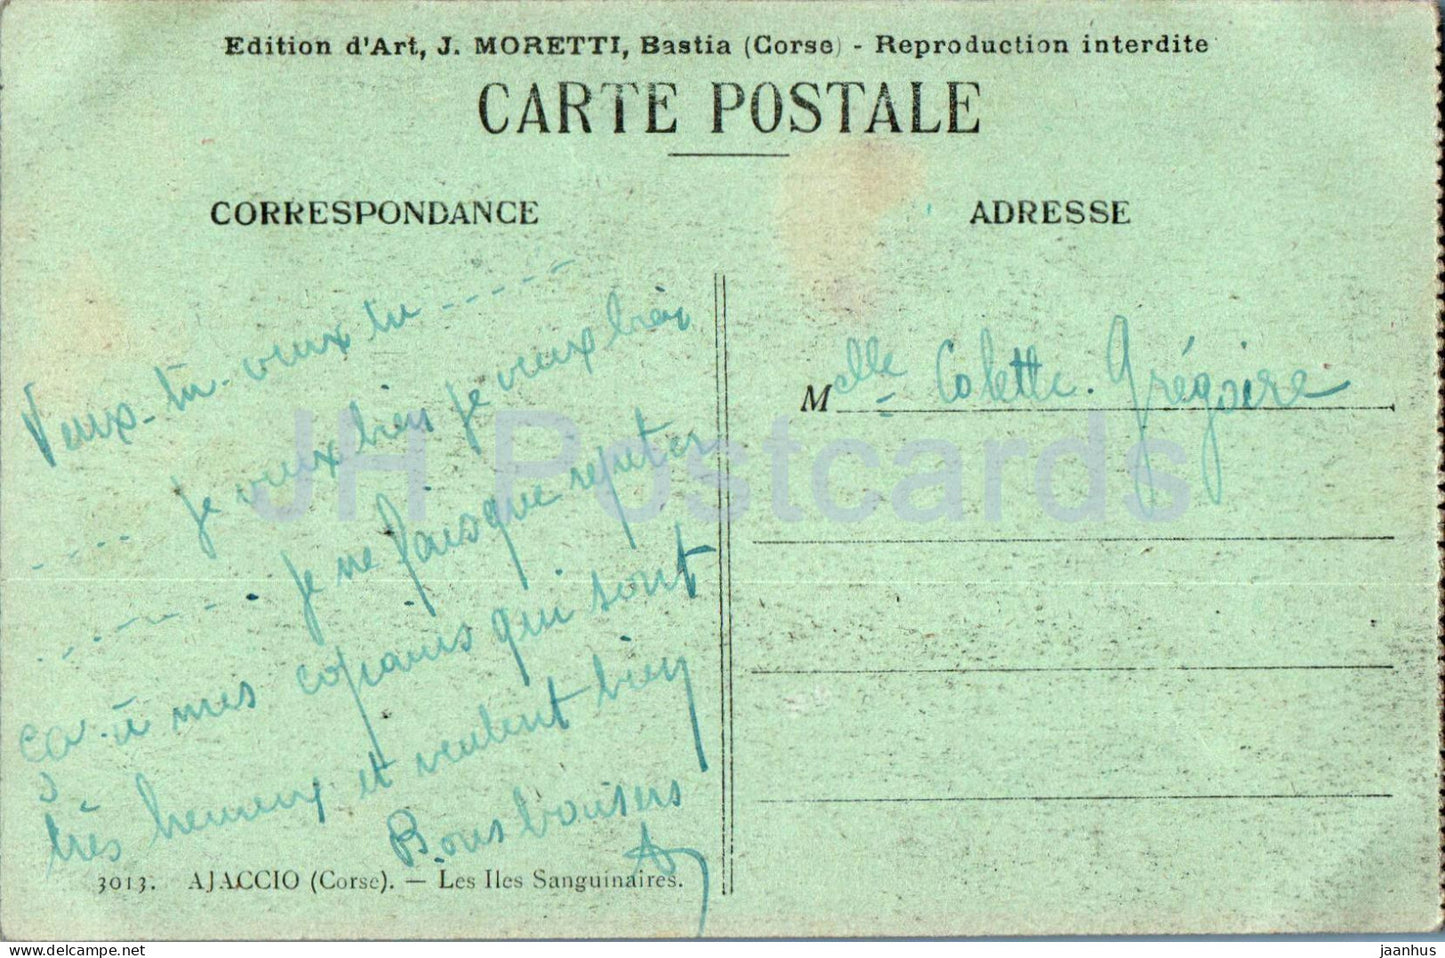 Ajaccio - Les Iles Sanguinaires - 3013 - alte Postkarte - Frankreich - gebraucht